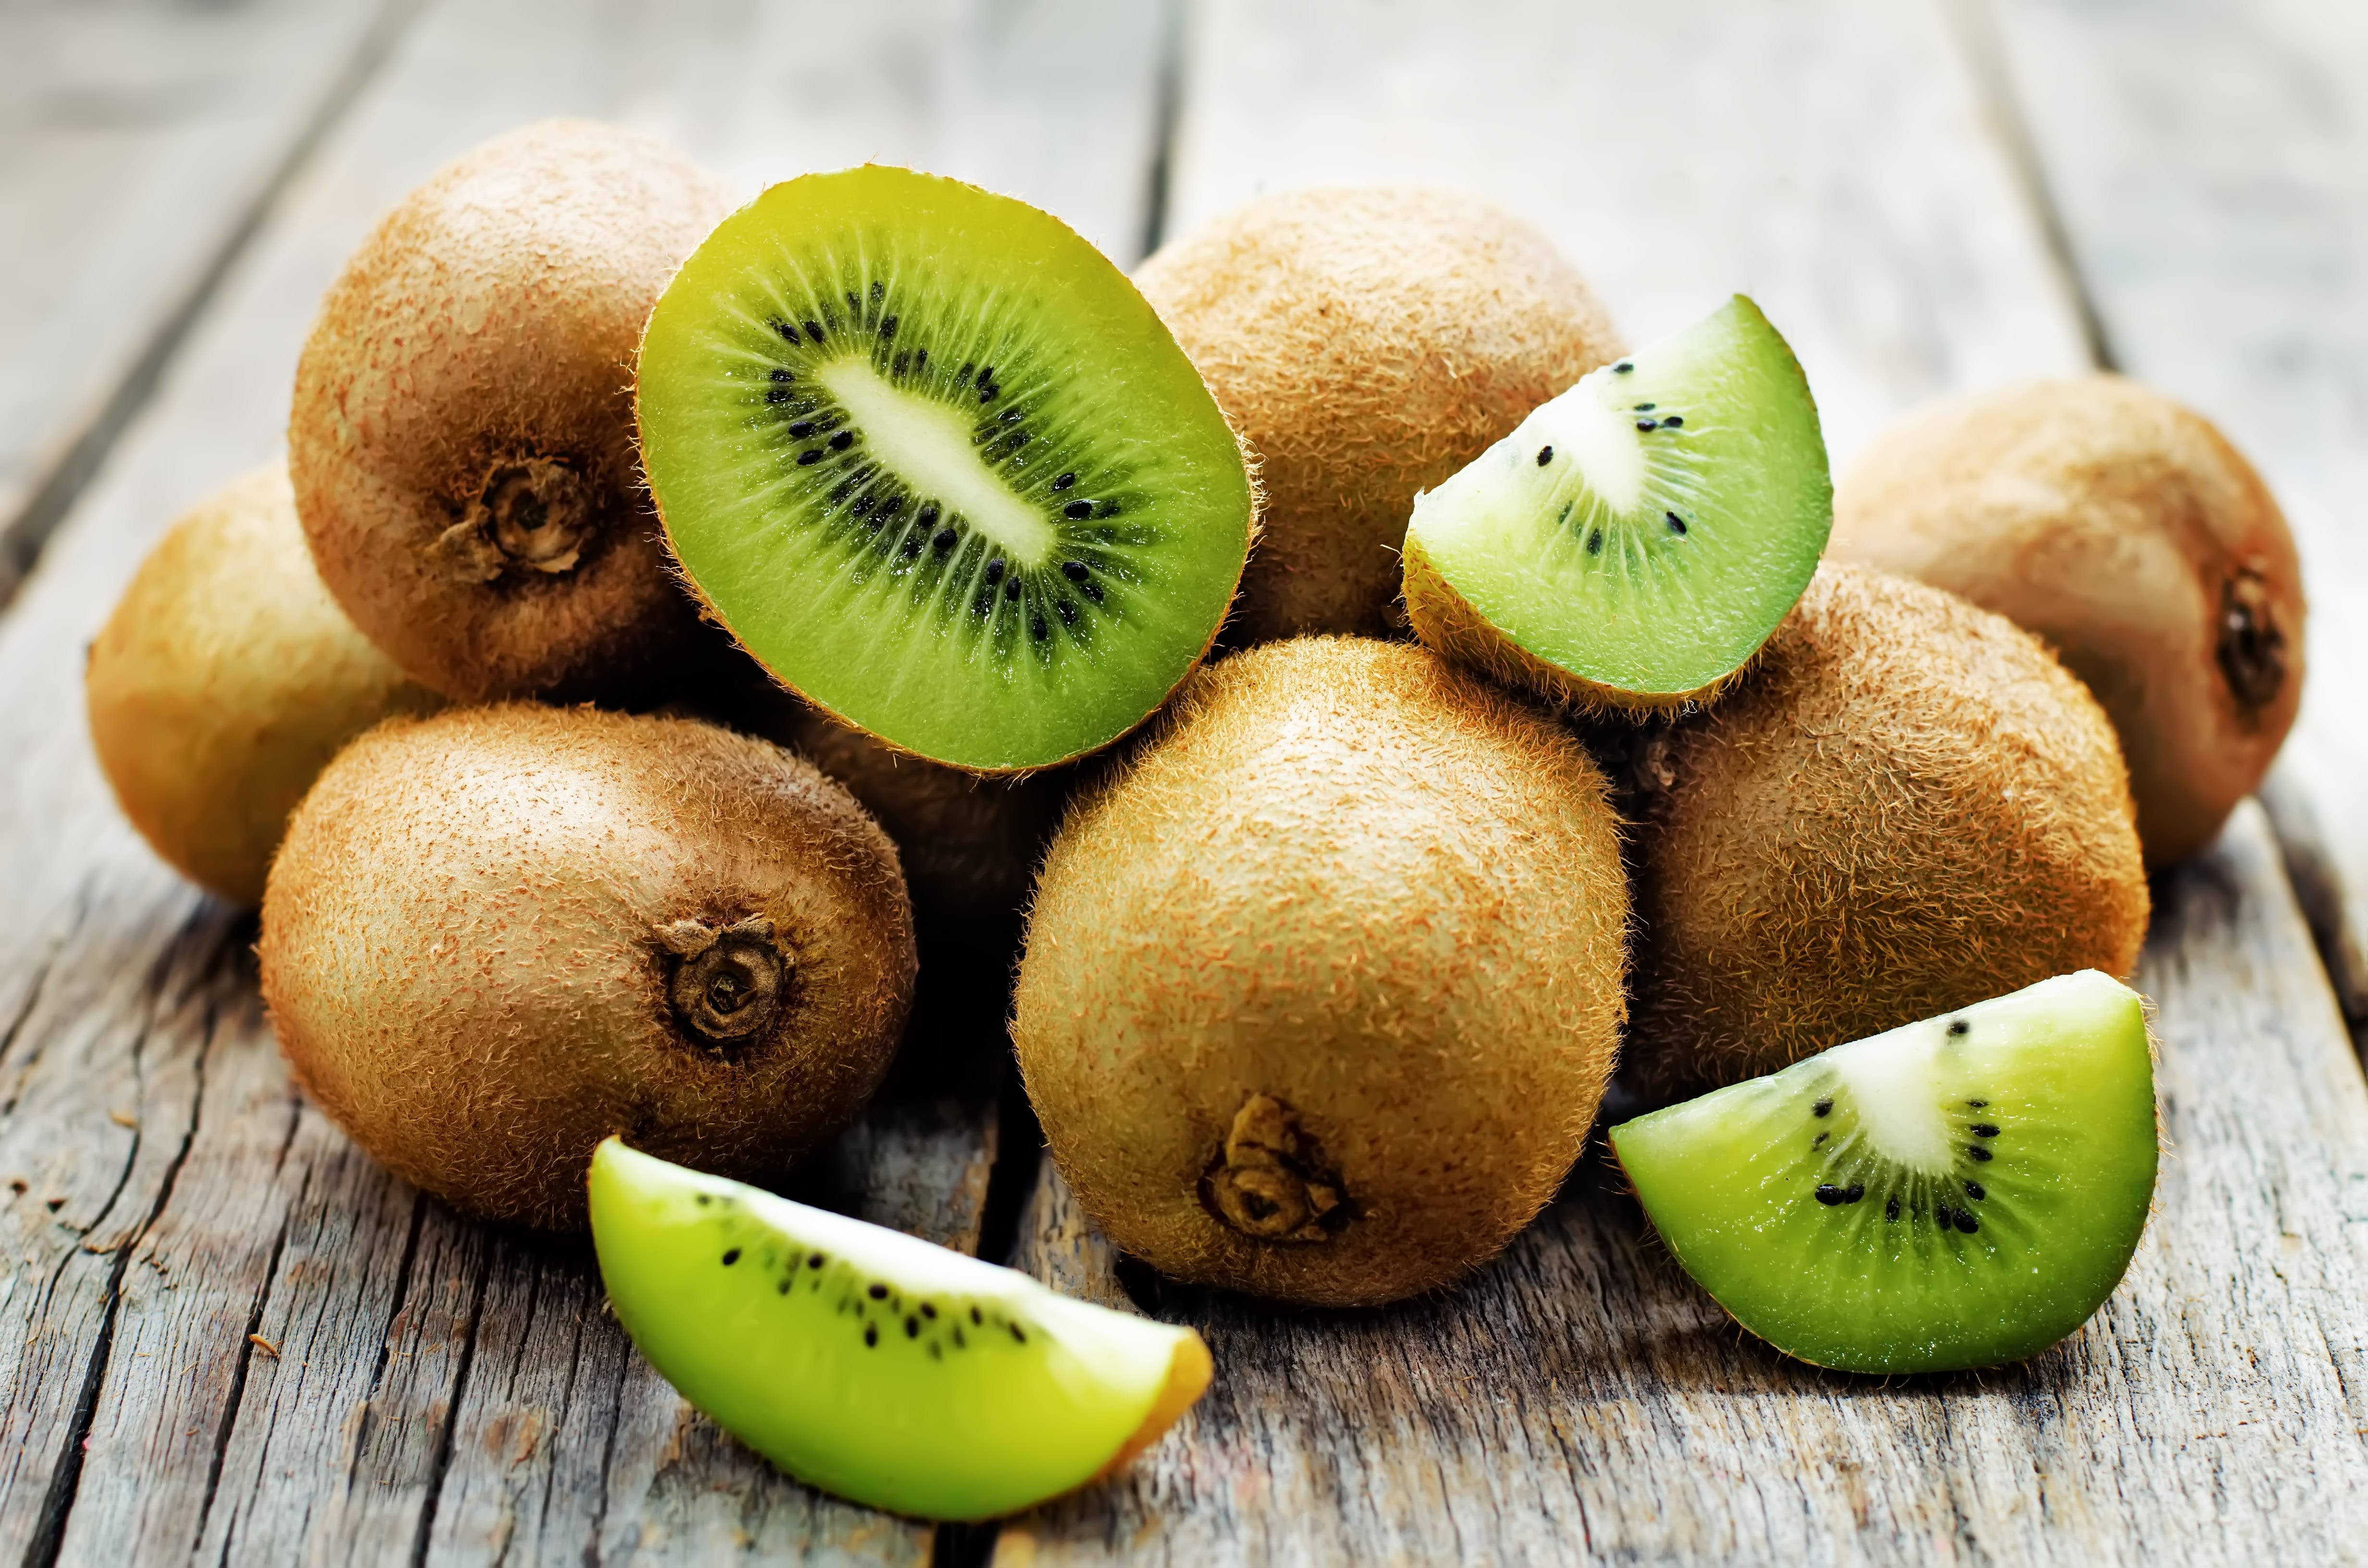 Surprising Origins Of the Kiwi Fruit